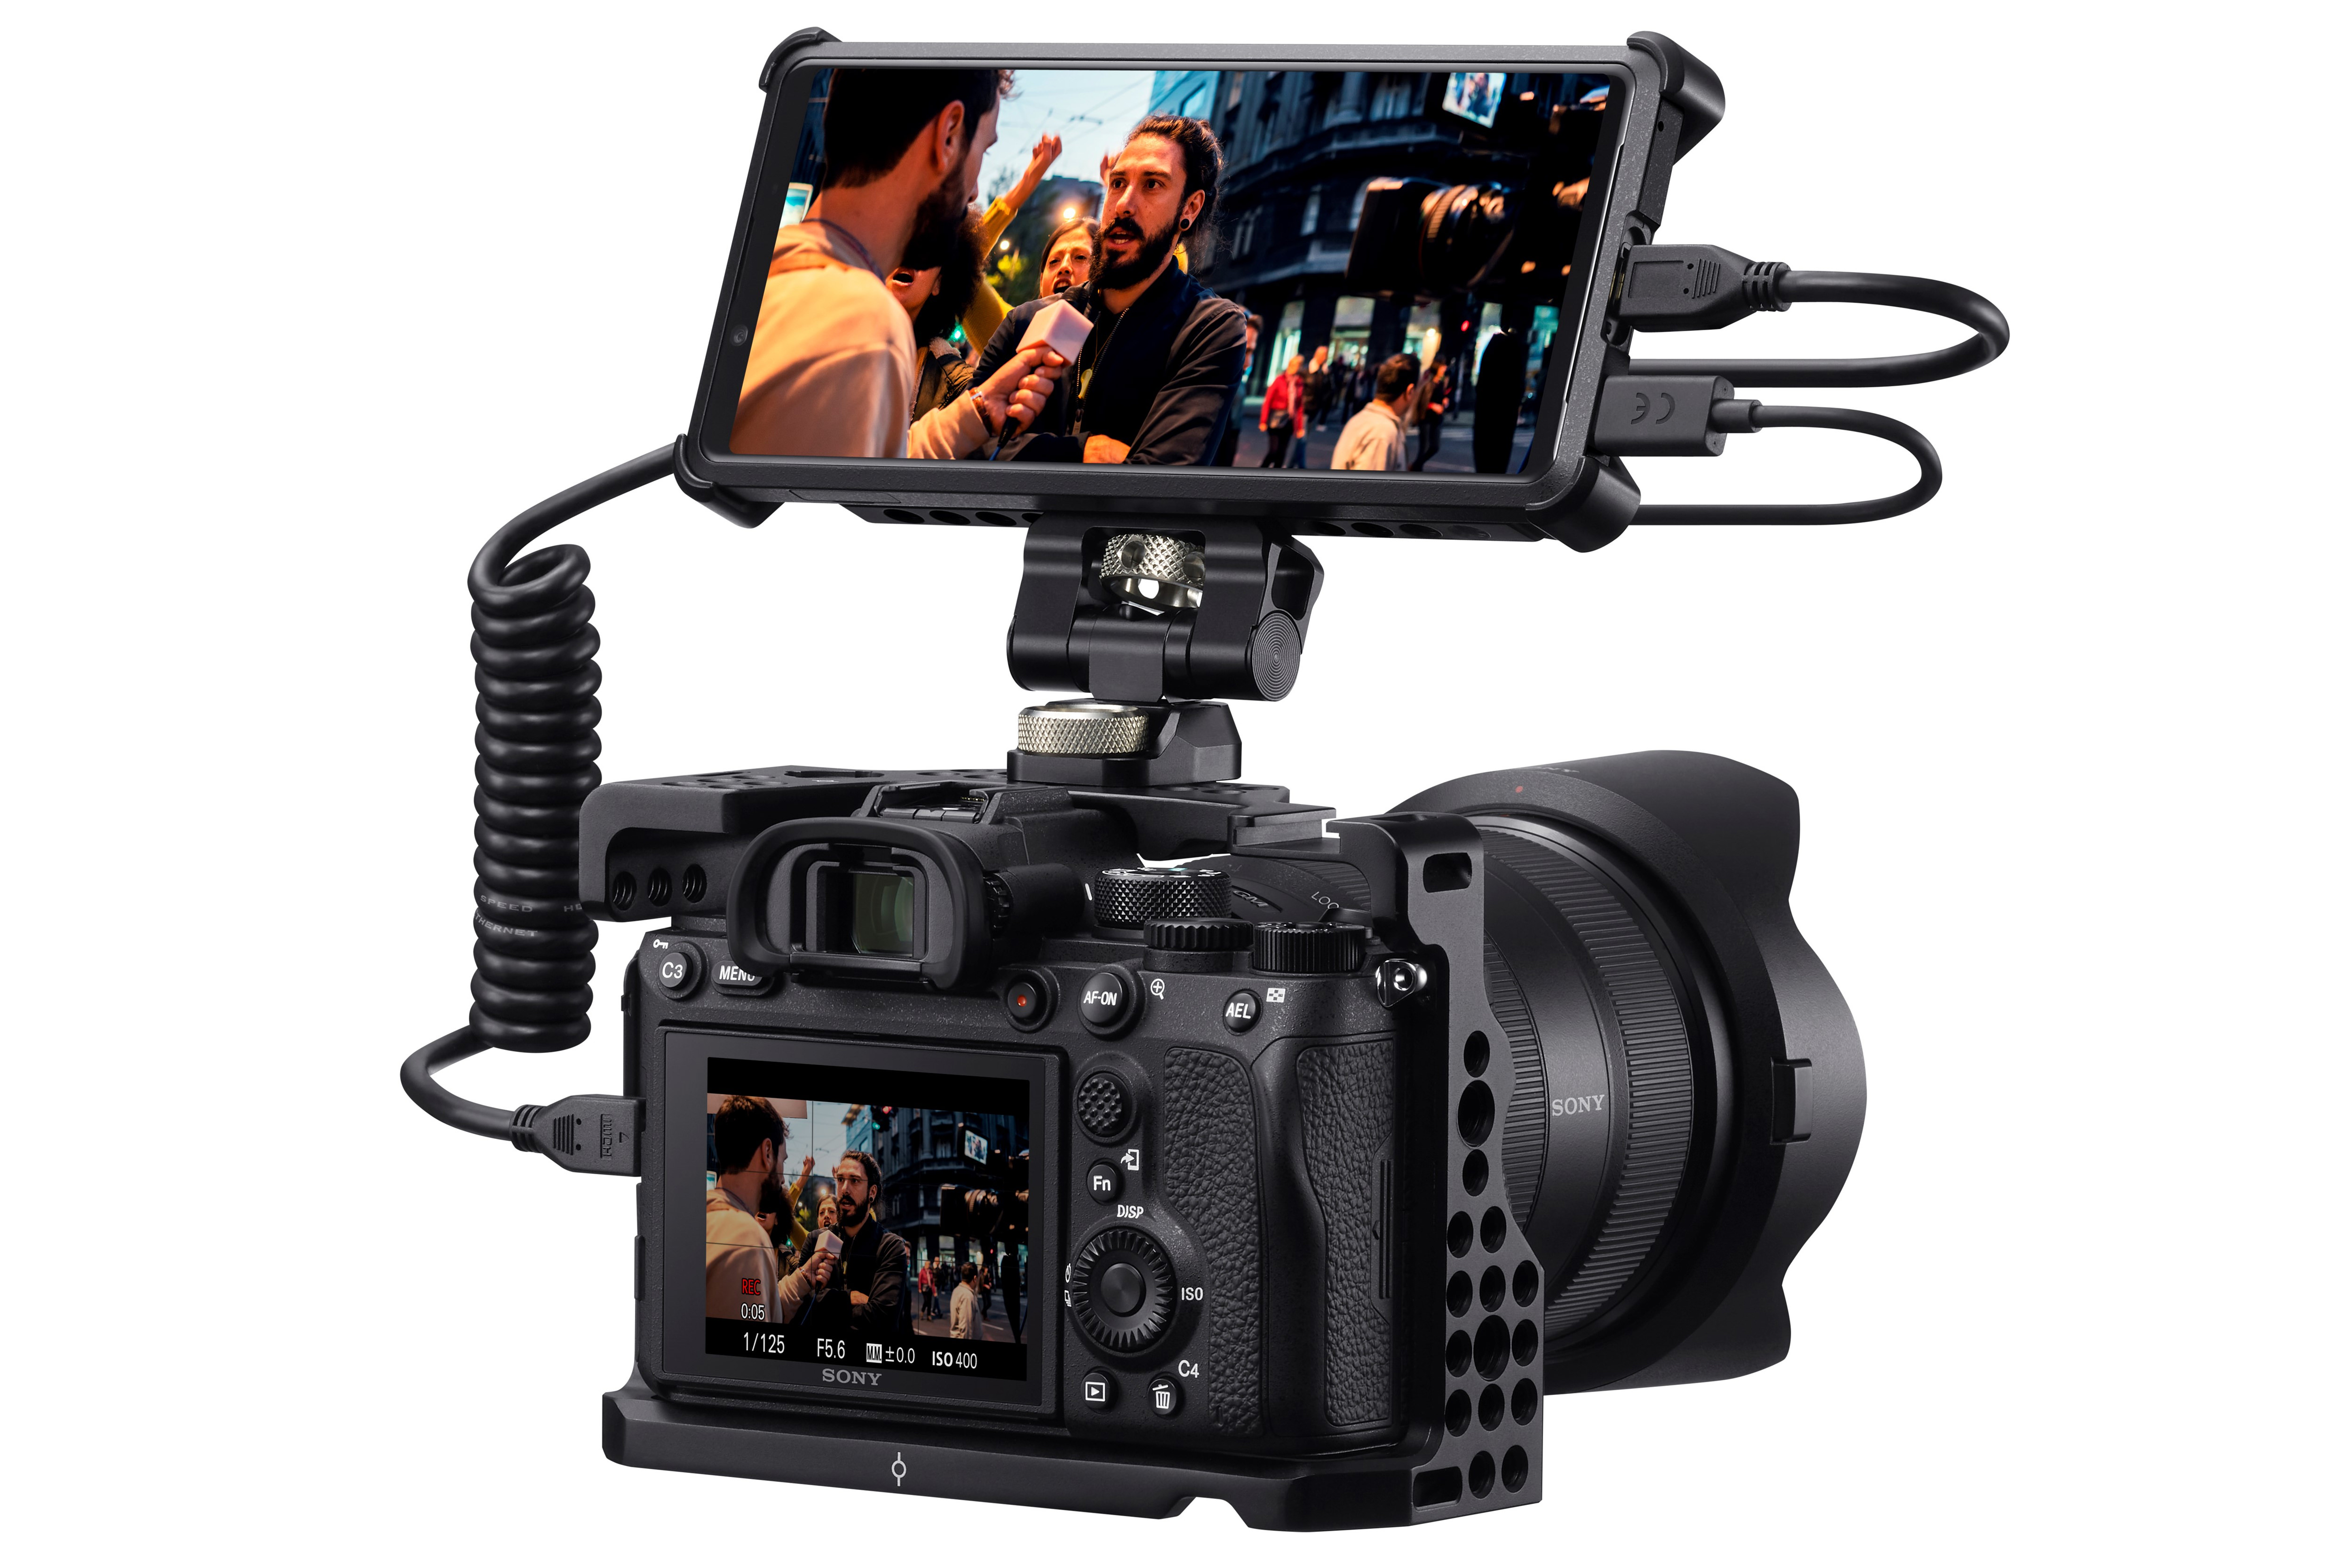 اکسپریا پرو / Xperia Pro سونی روی دوربین رندر